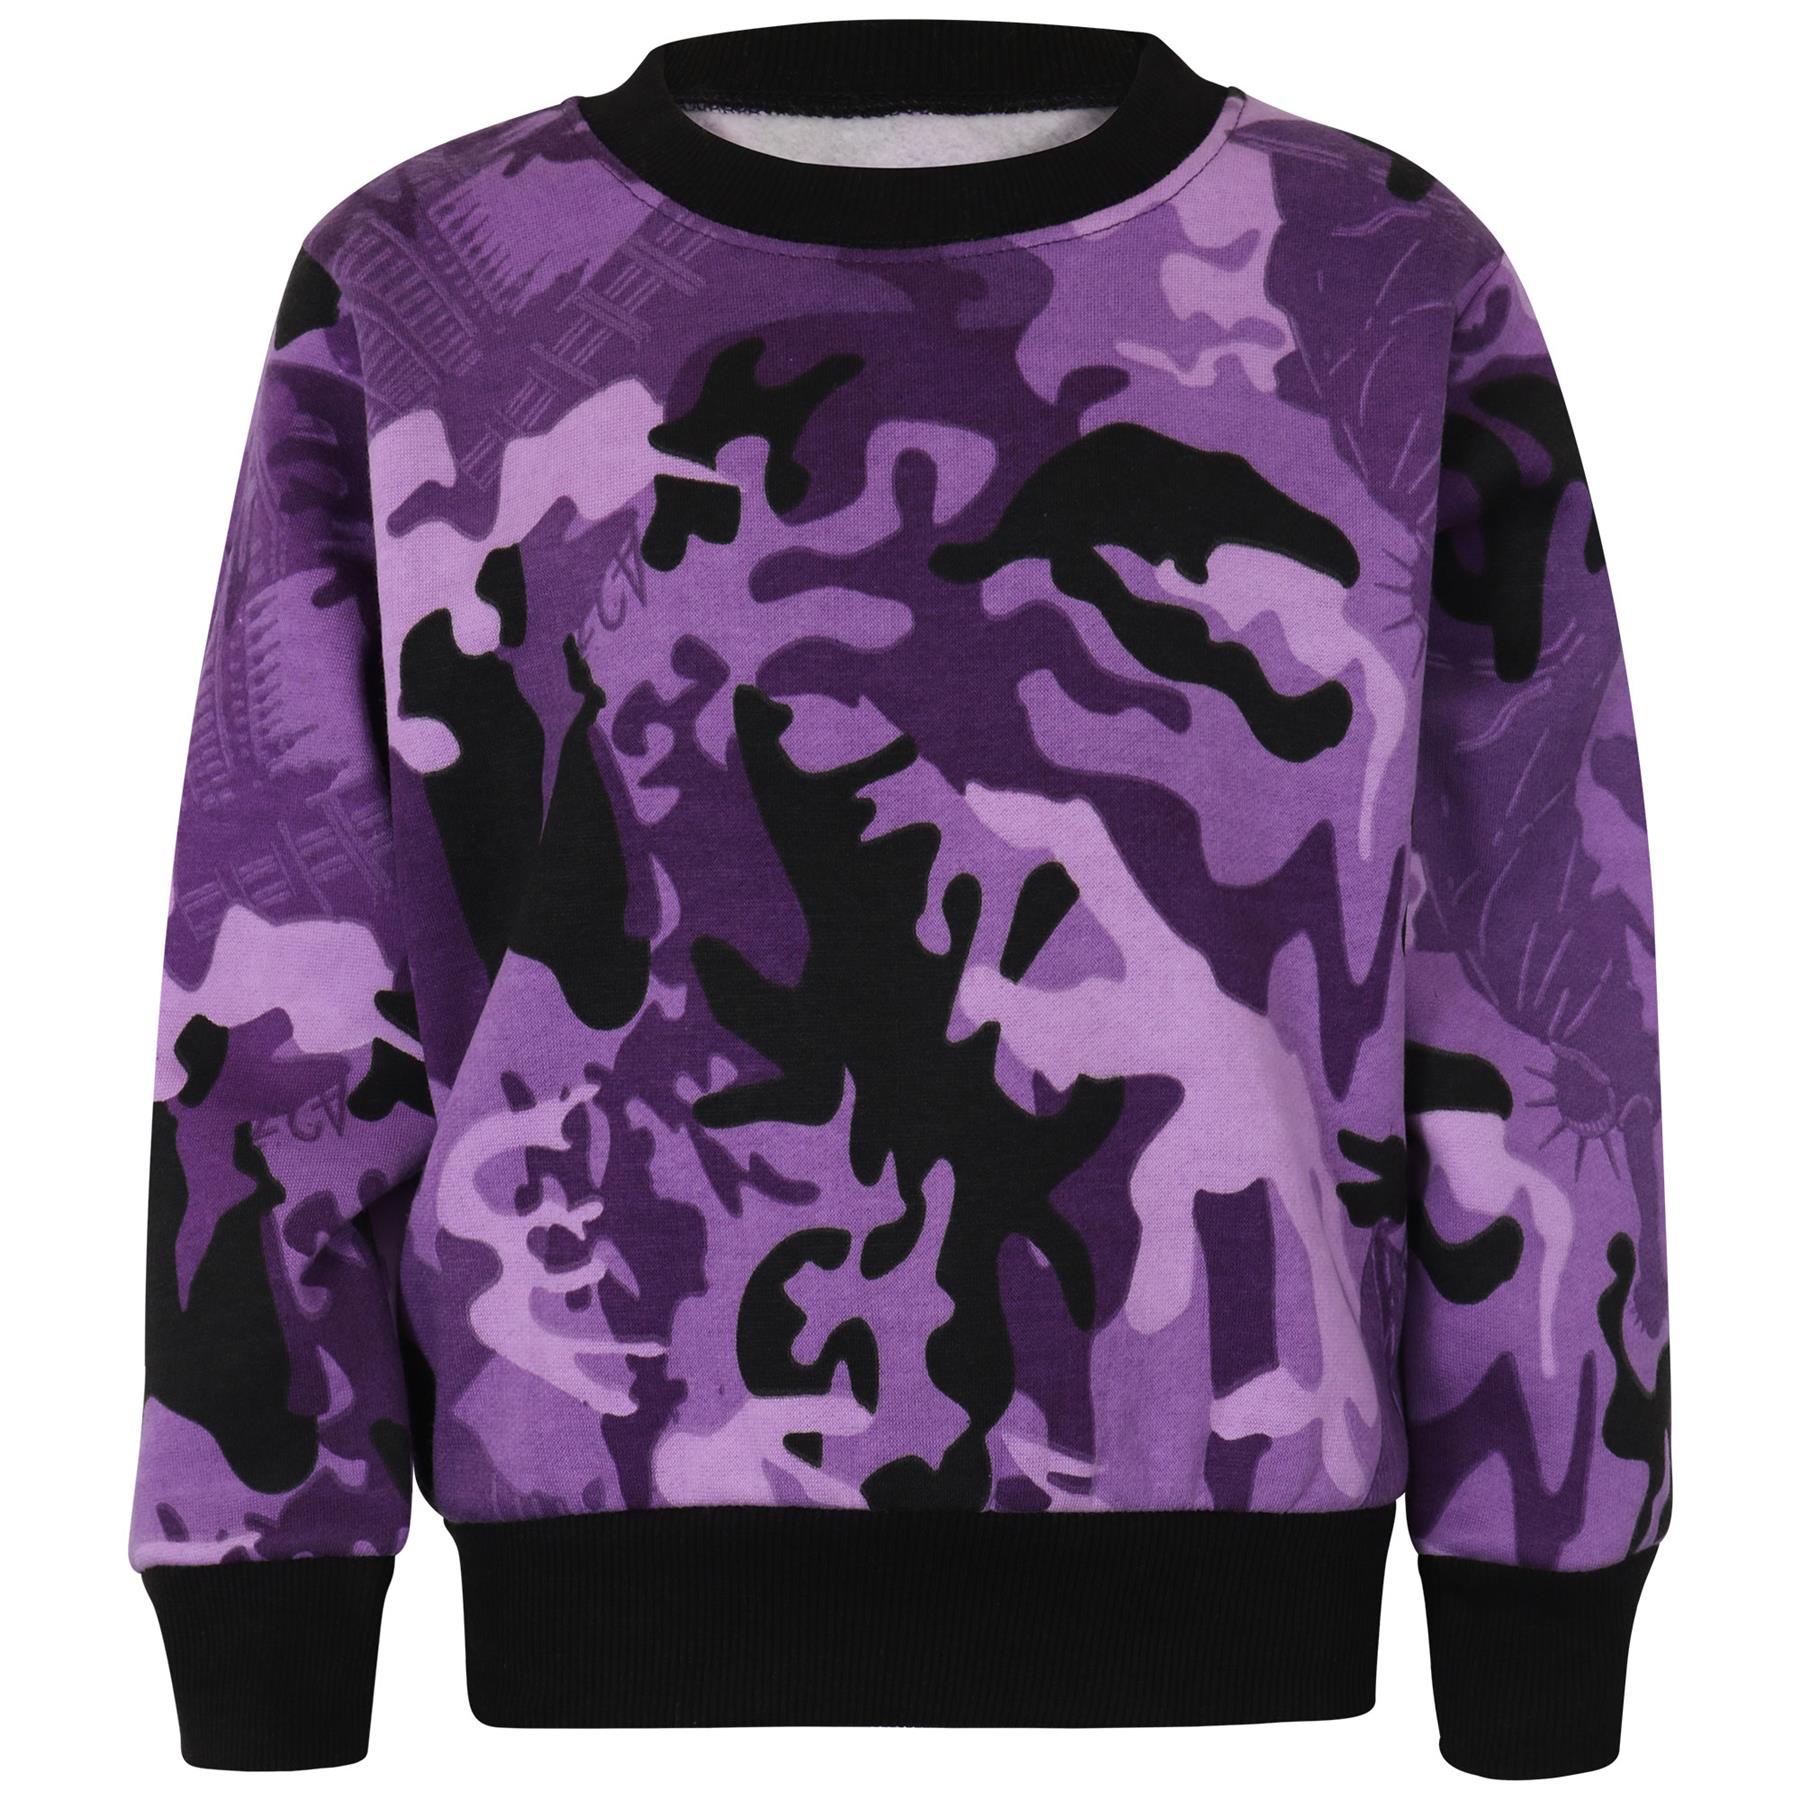 Girls Camouflage Sweatshirt & Bottom Tracksuit